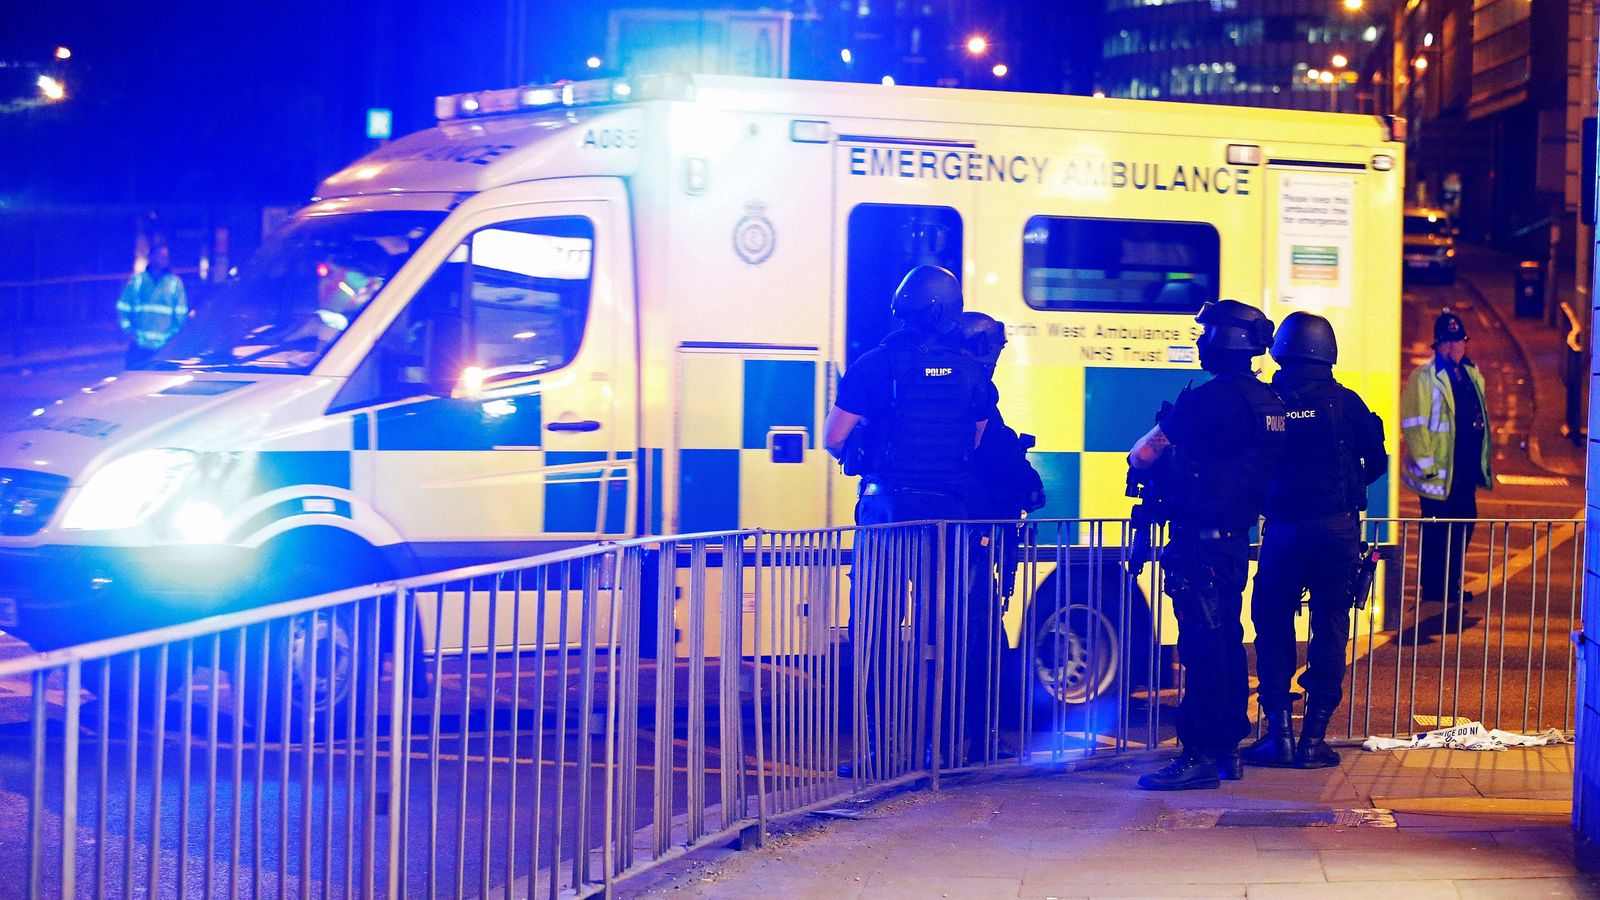 Man arrested after allegedly dressing as Manchester Arena bomber Salman Abedi for Halloween